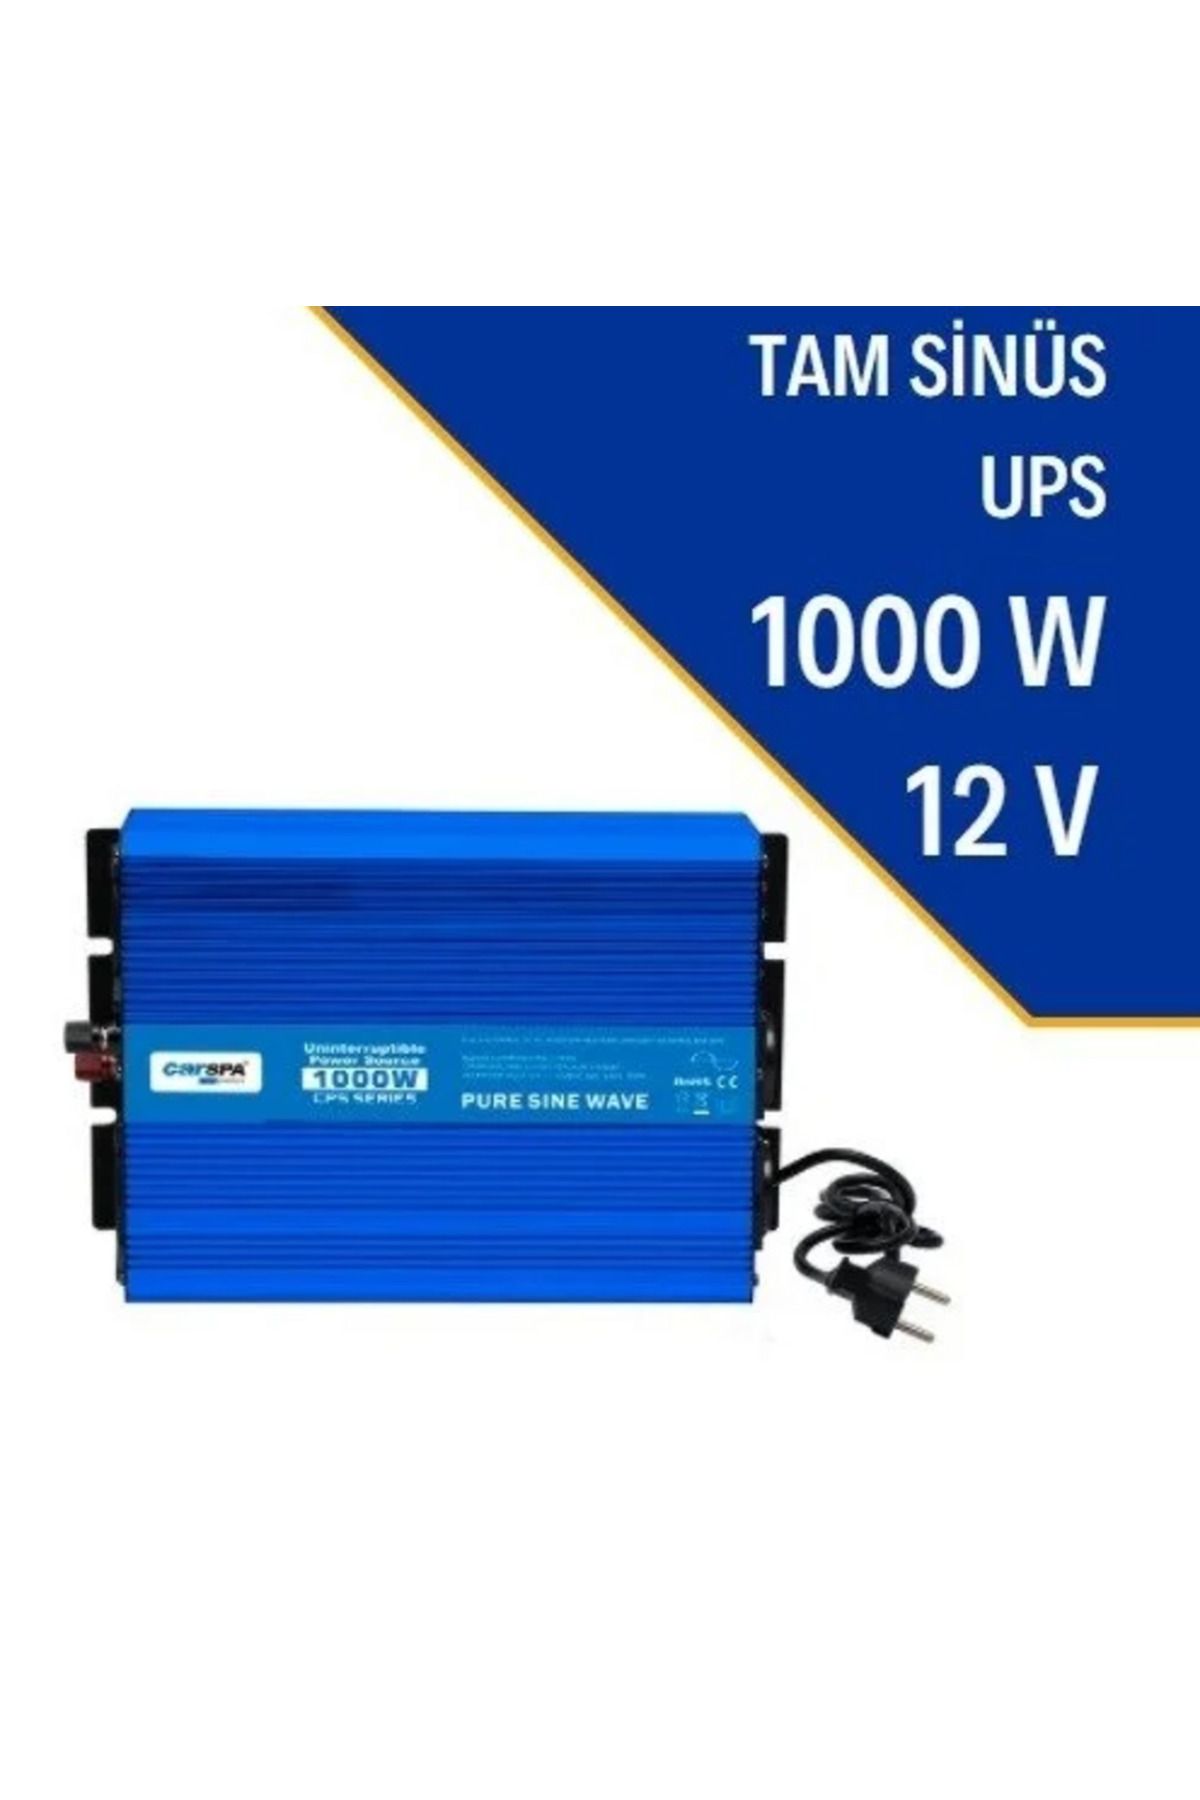 Carspa ® 1000w 12v Tam Sinüs Inverter (UPS) Ea2363217